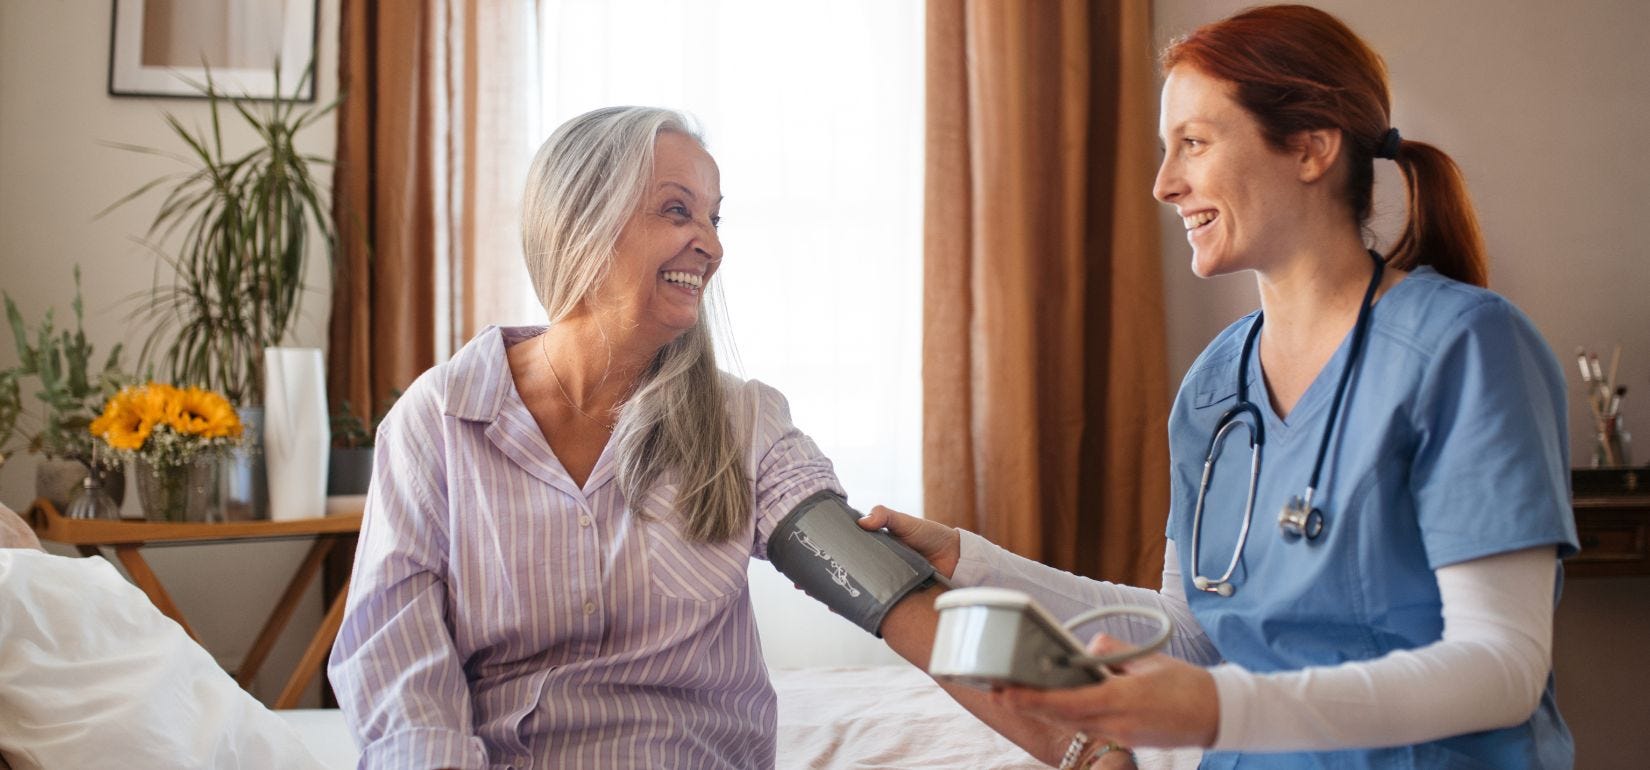 Caregiver checking an elderly patients vitals